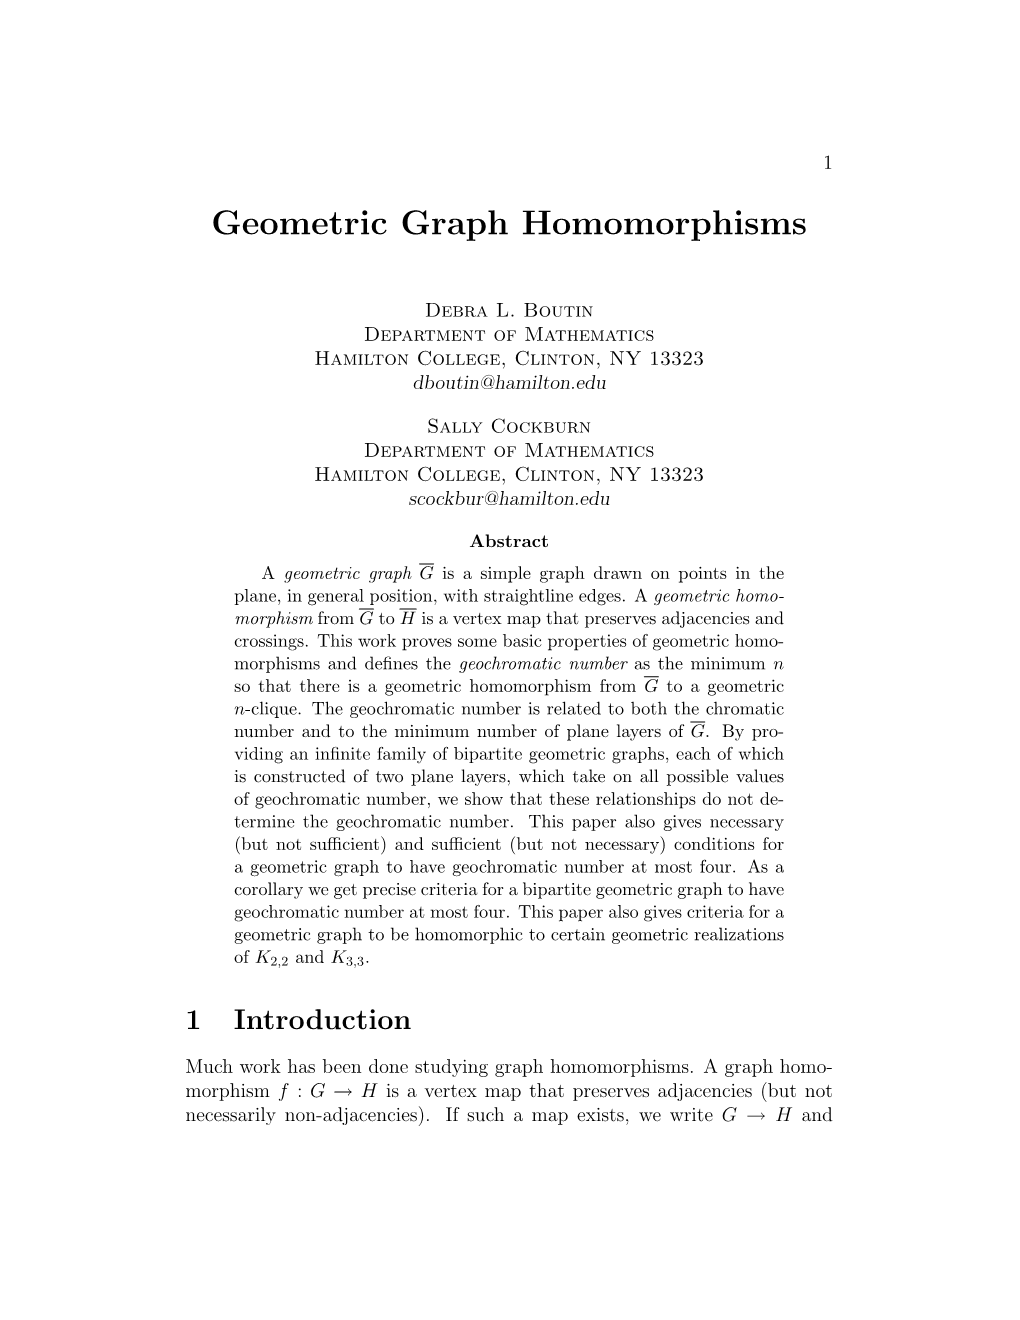 Geometric Graph Homomorphisms